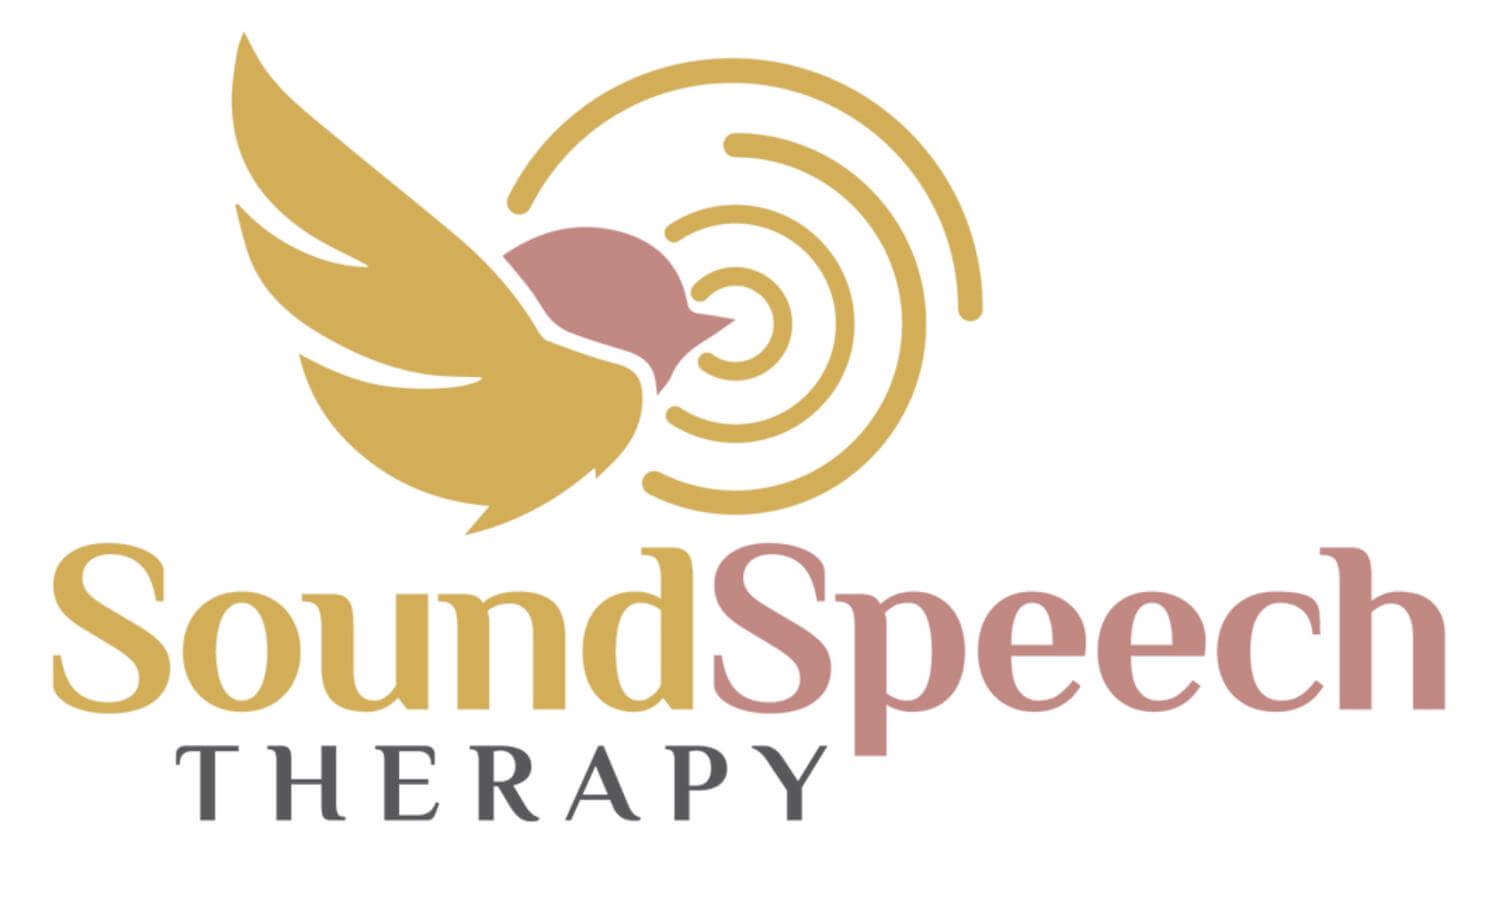 Business Logo: SoundSpeech Therapy